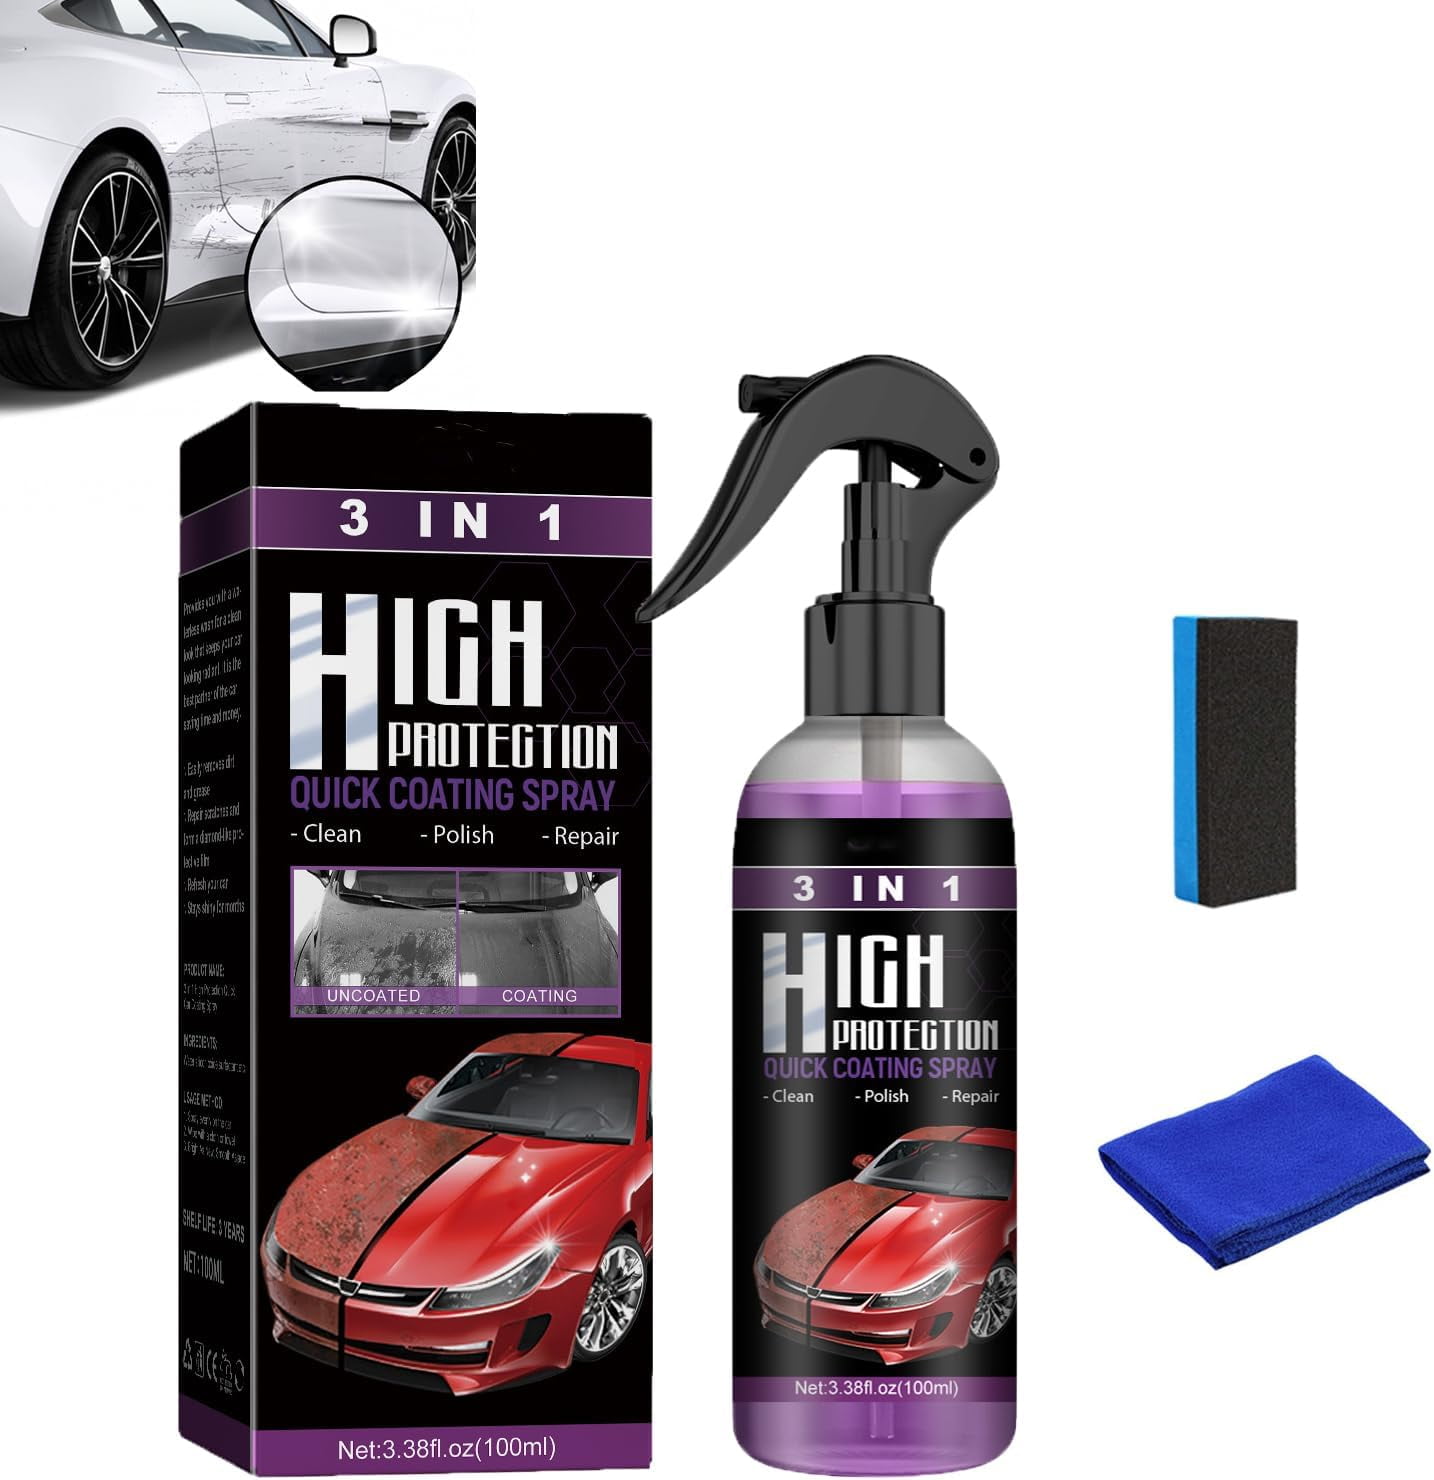  Newbeeoo High Protection 3 In 1 Spray, Ottostuart Car Coating  Spray, Homebbc 3 In 1 High Protection Quick Car Coating Spray, 3 In 1 High  Protection Wax, Rayhong Spray Coating Agent (30ML 5PCS) : Automotive